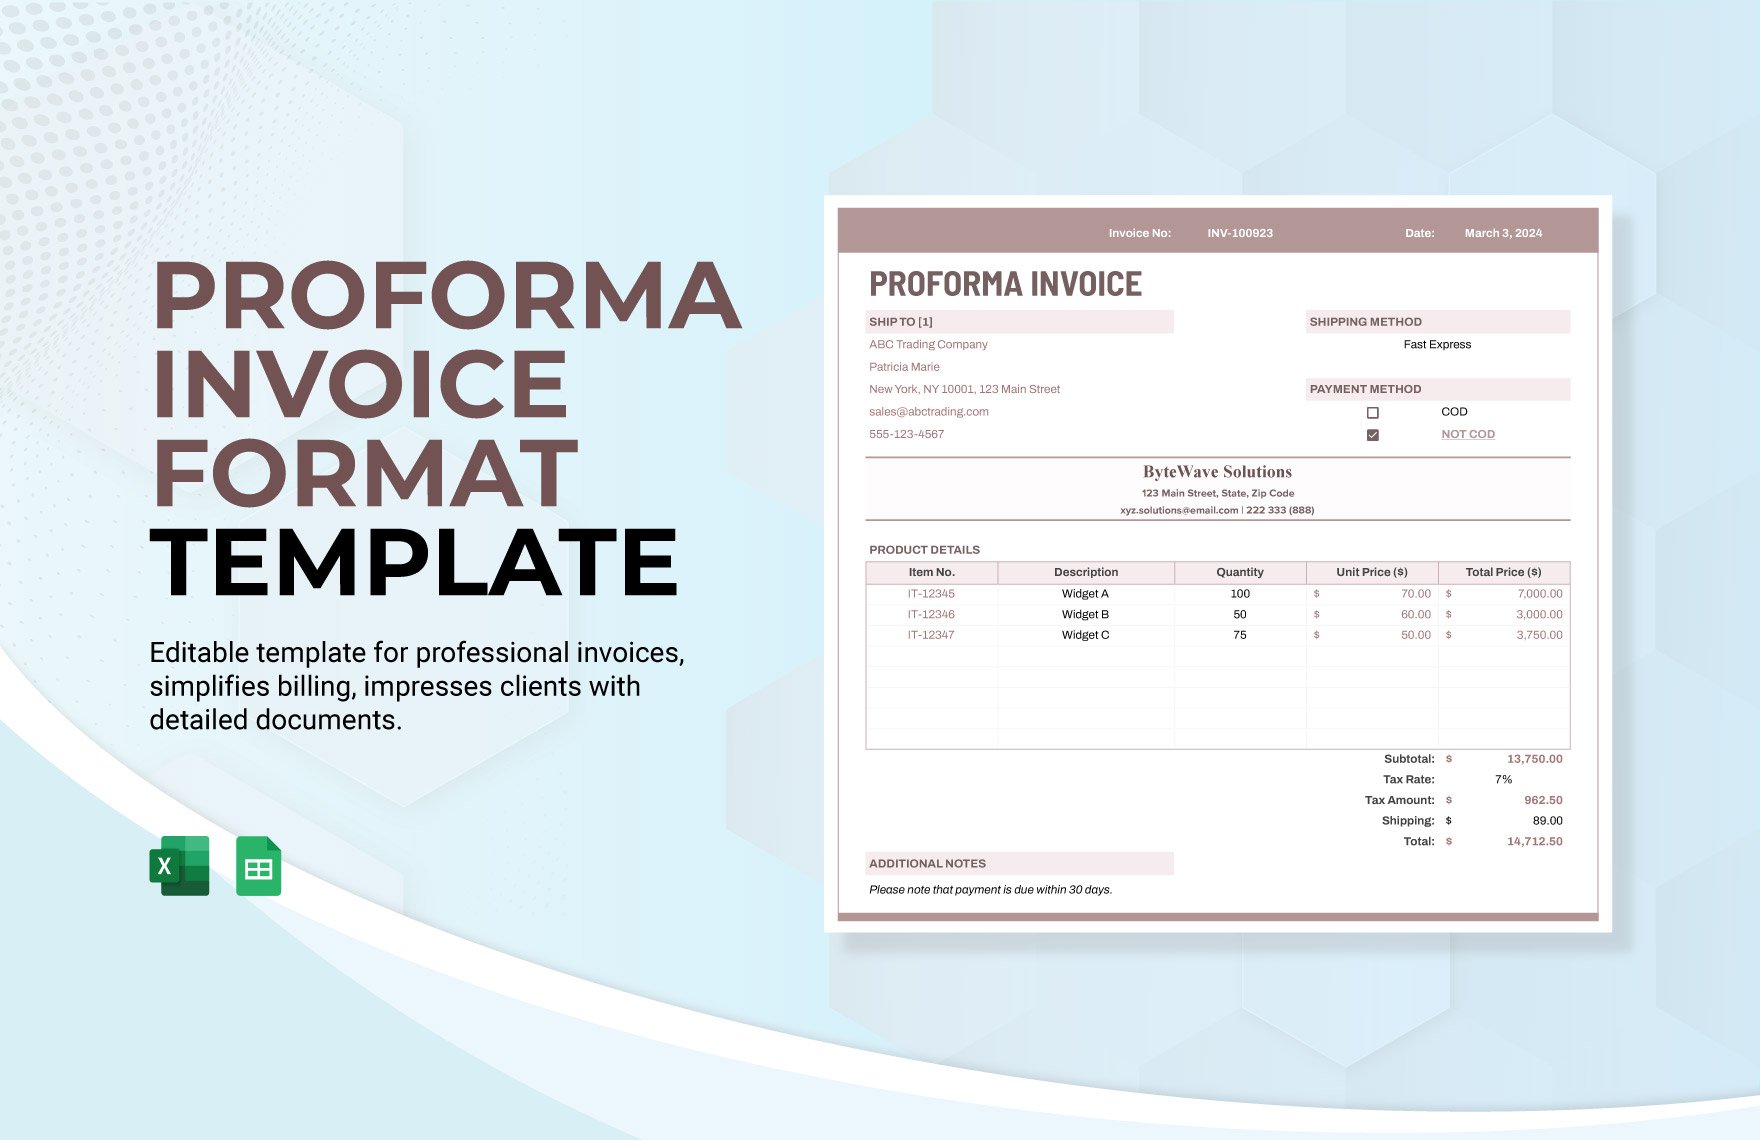 Proforma Invoice Format Template